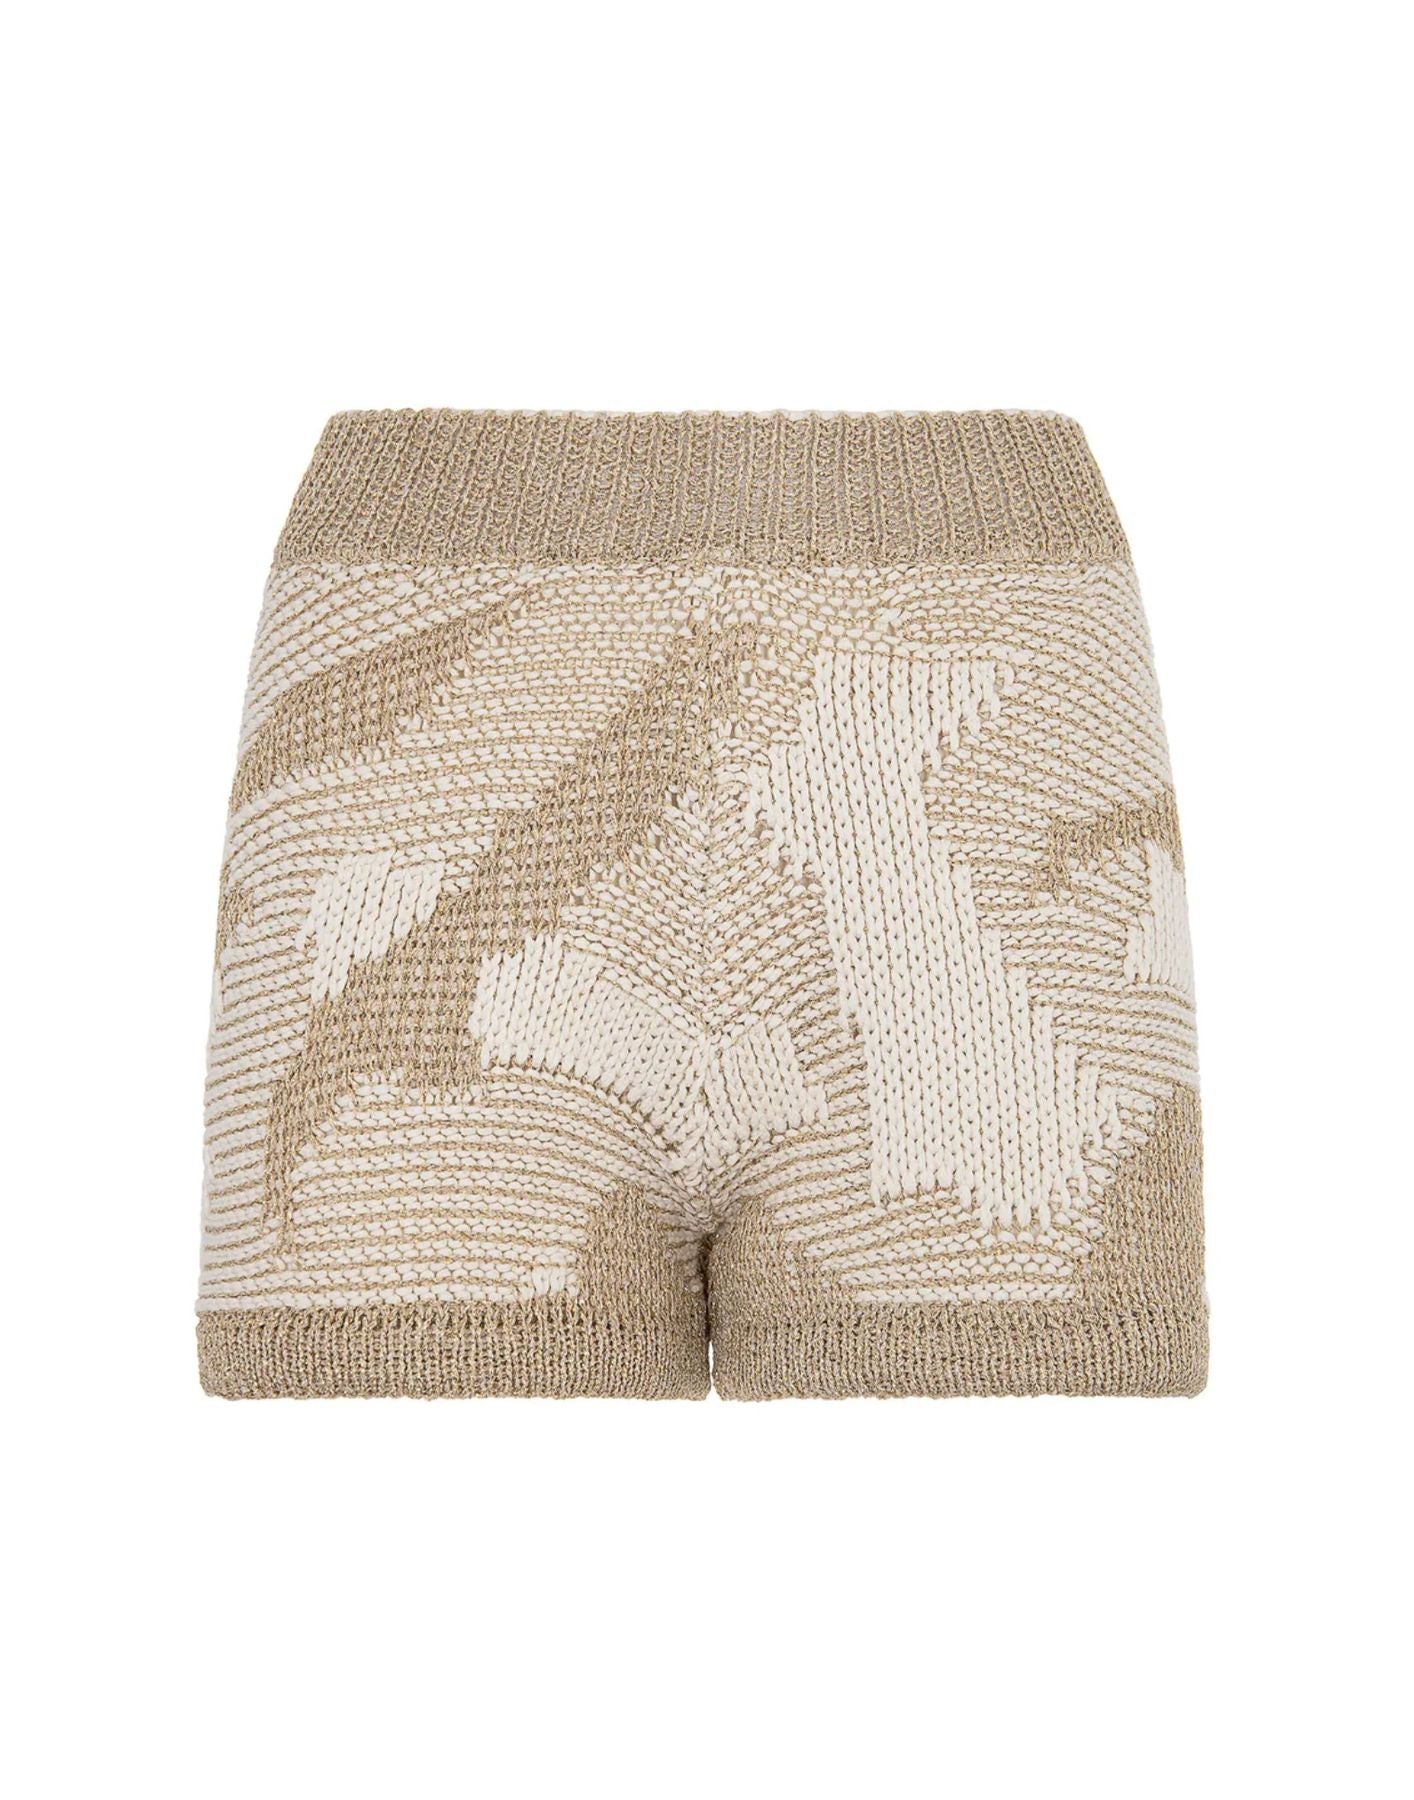 Pantalones cortos para la mujer Shkd05048 Variante 1 Akep